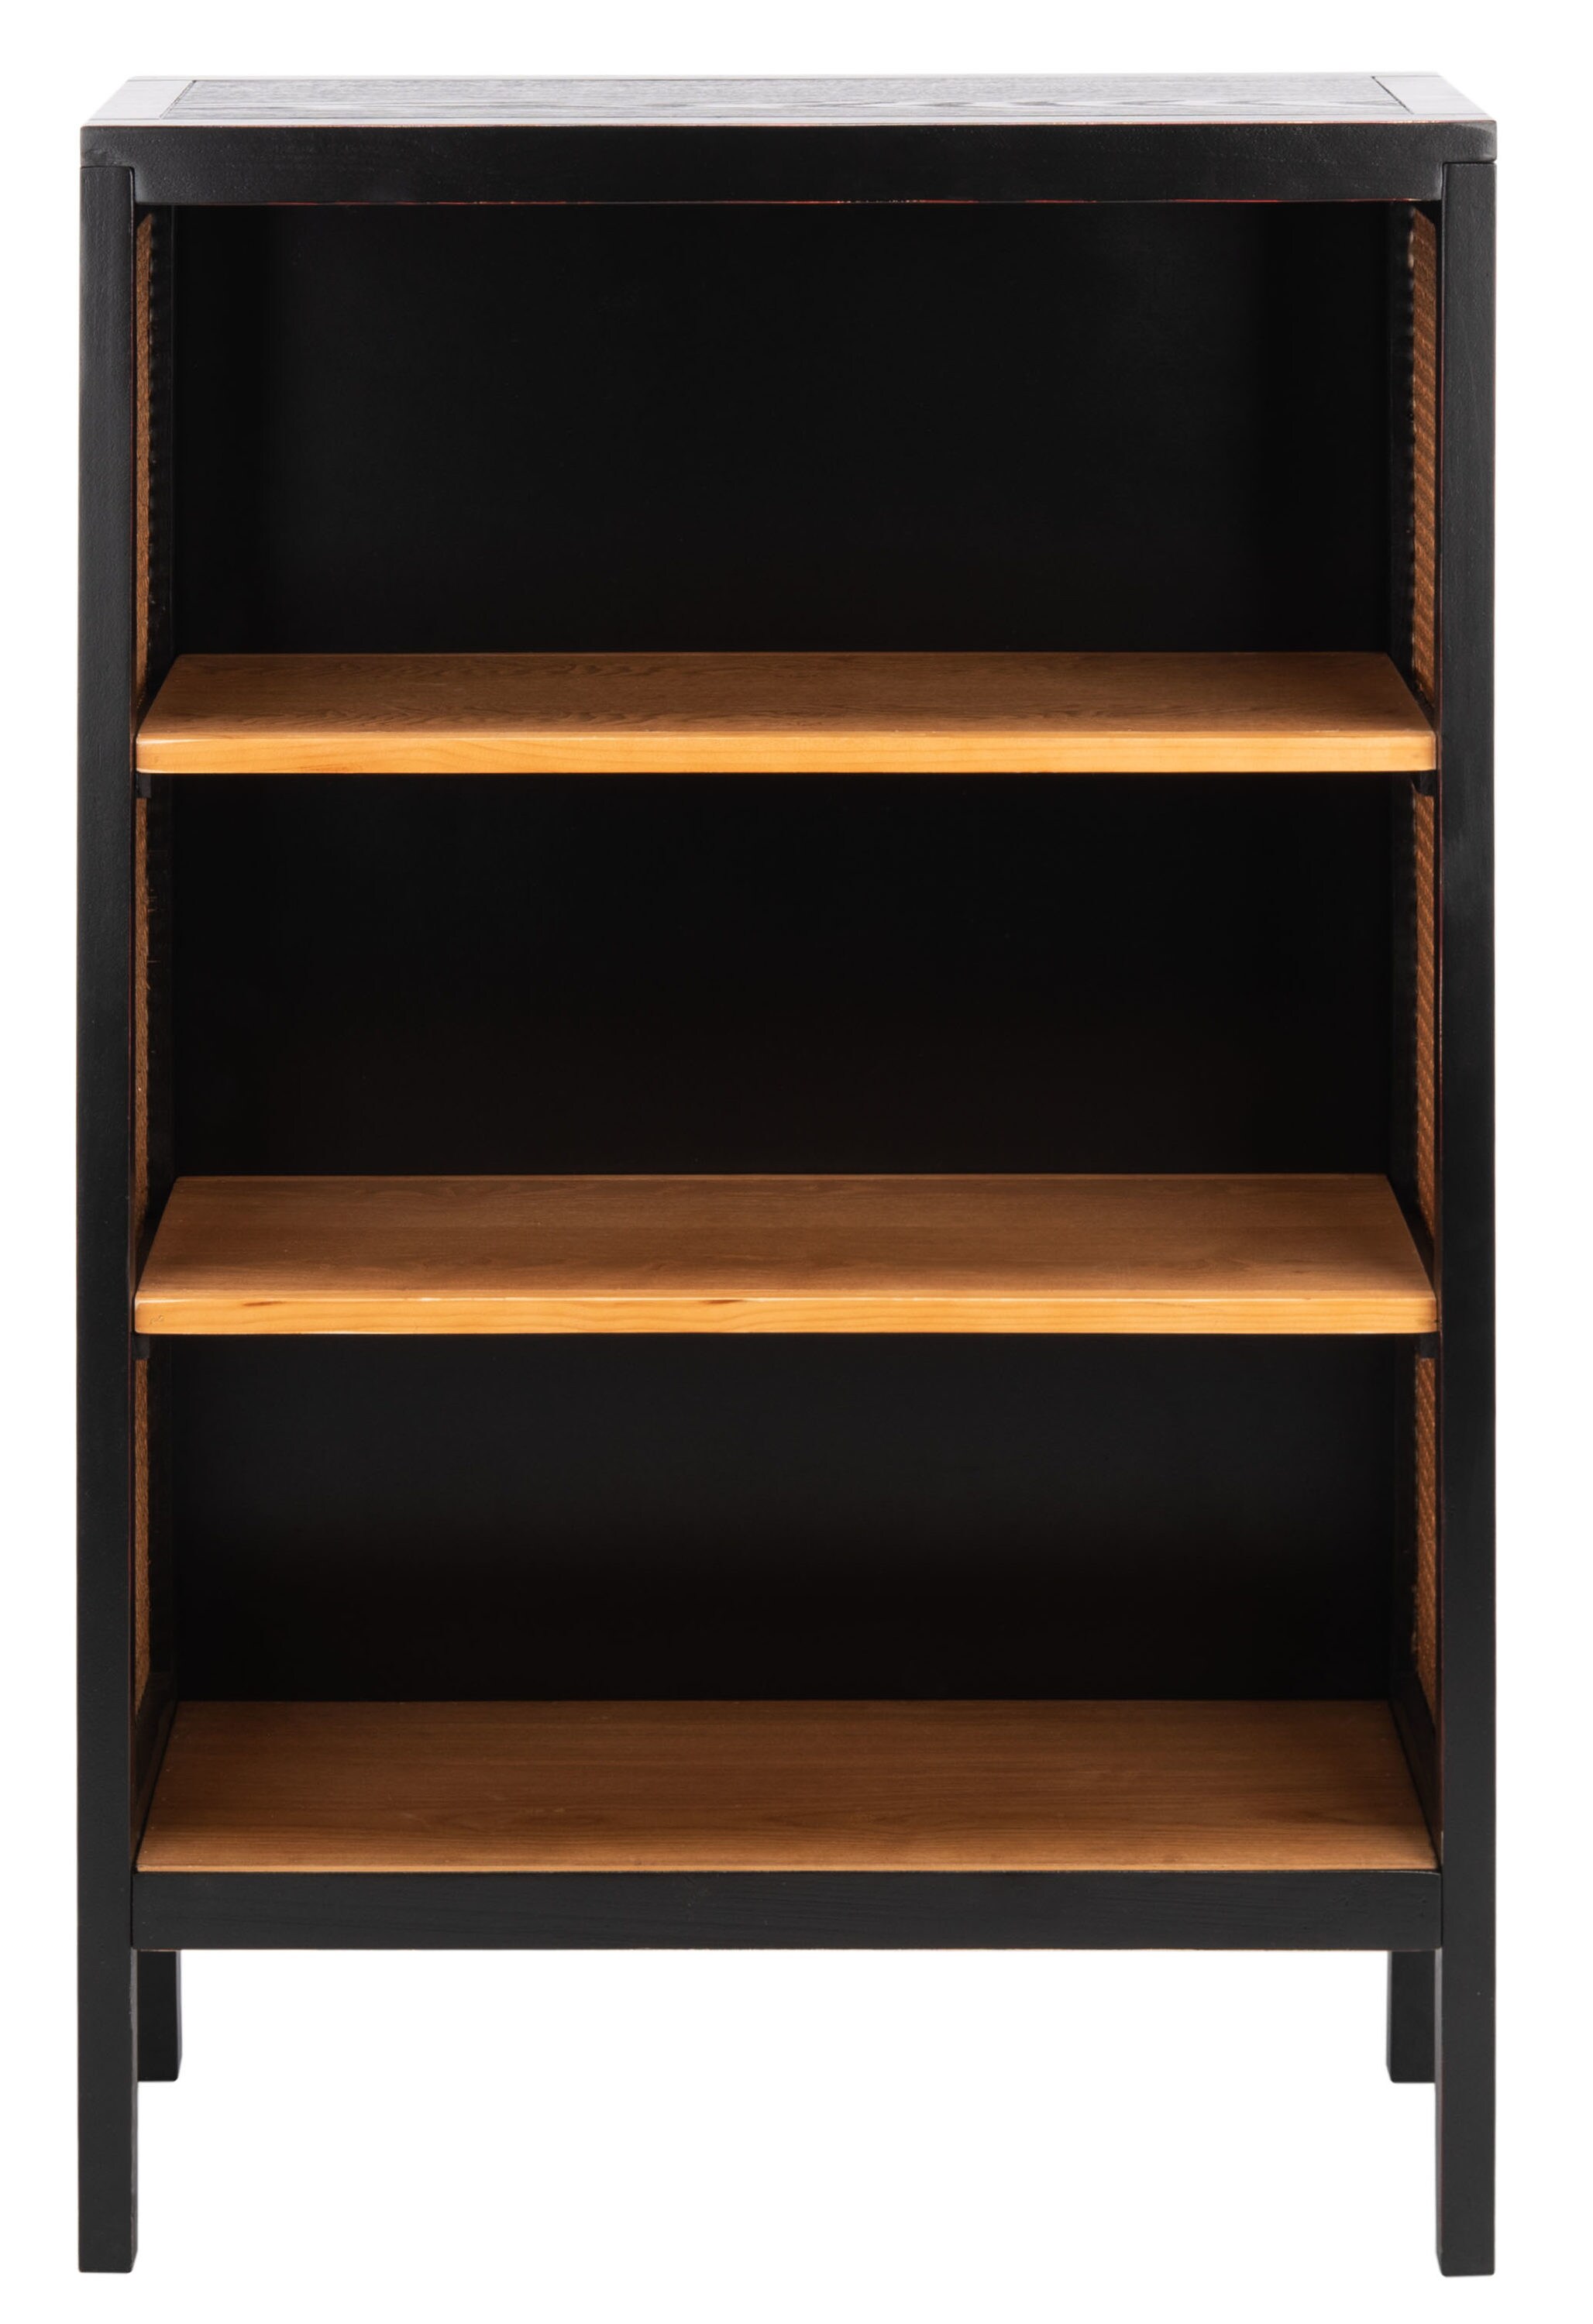 Natural Beech White Wooden PVC 3 Shelf Bookcase Storage Tier Decor Display Rack 